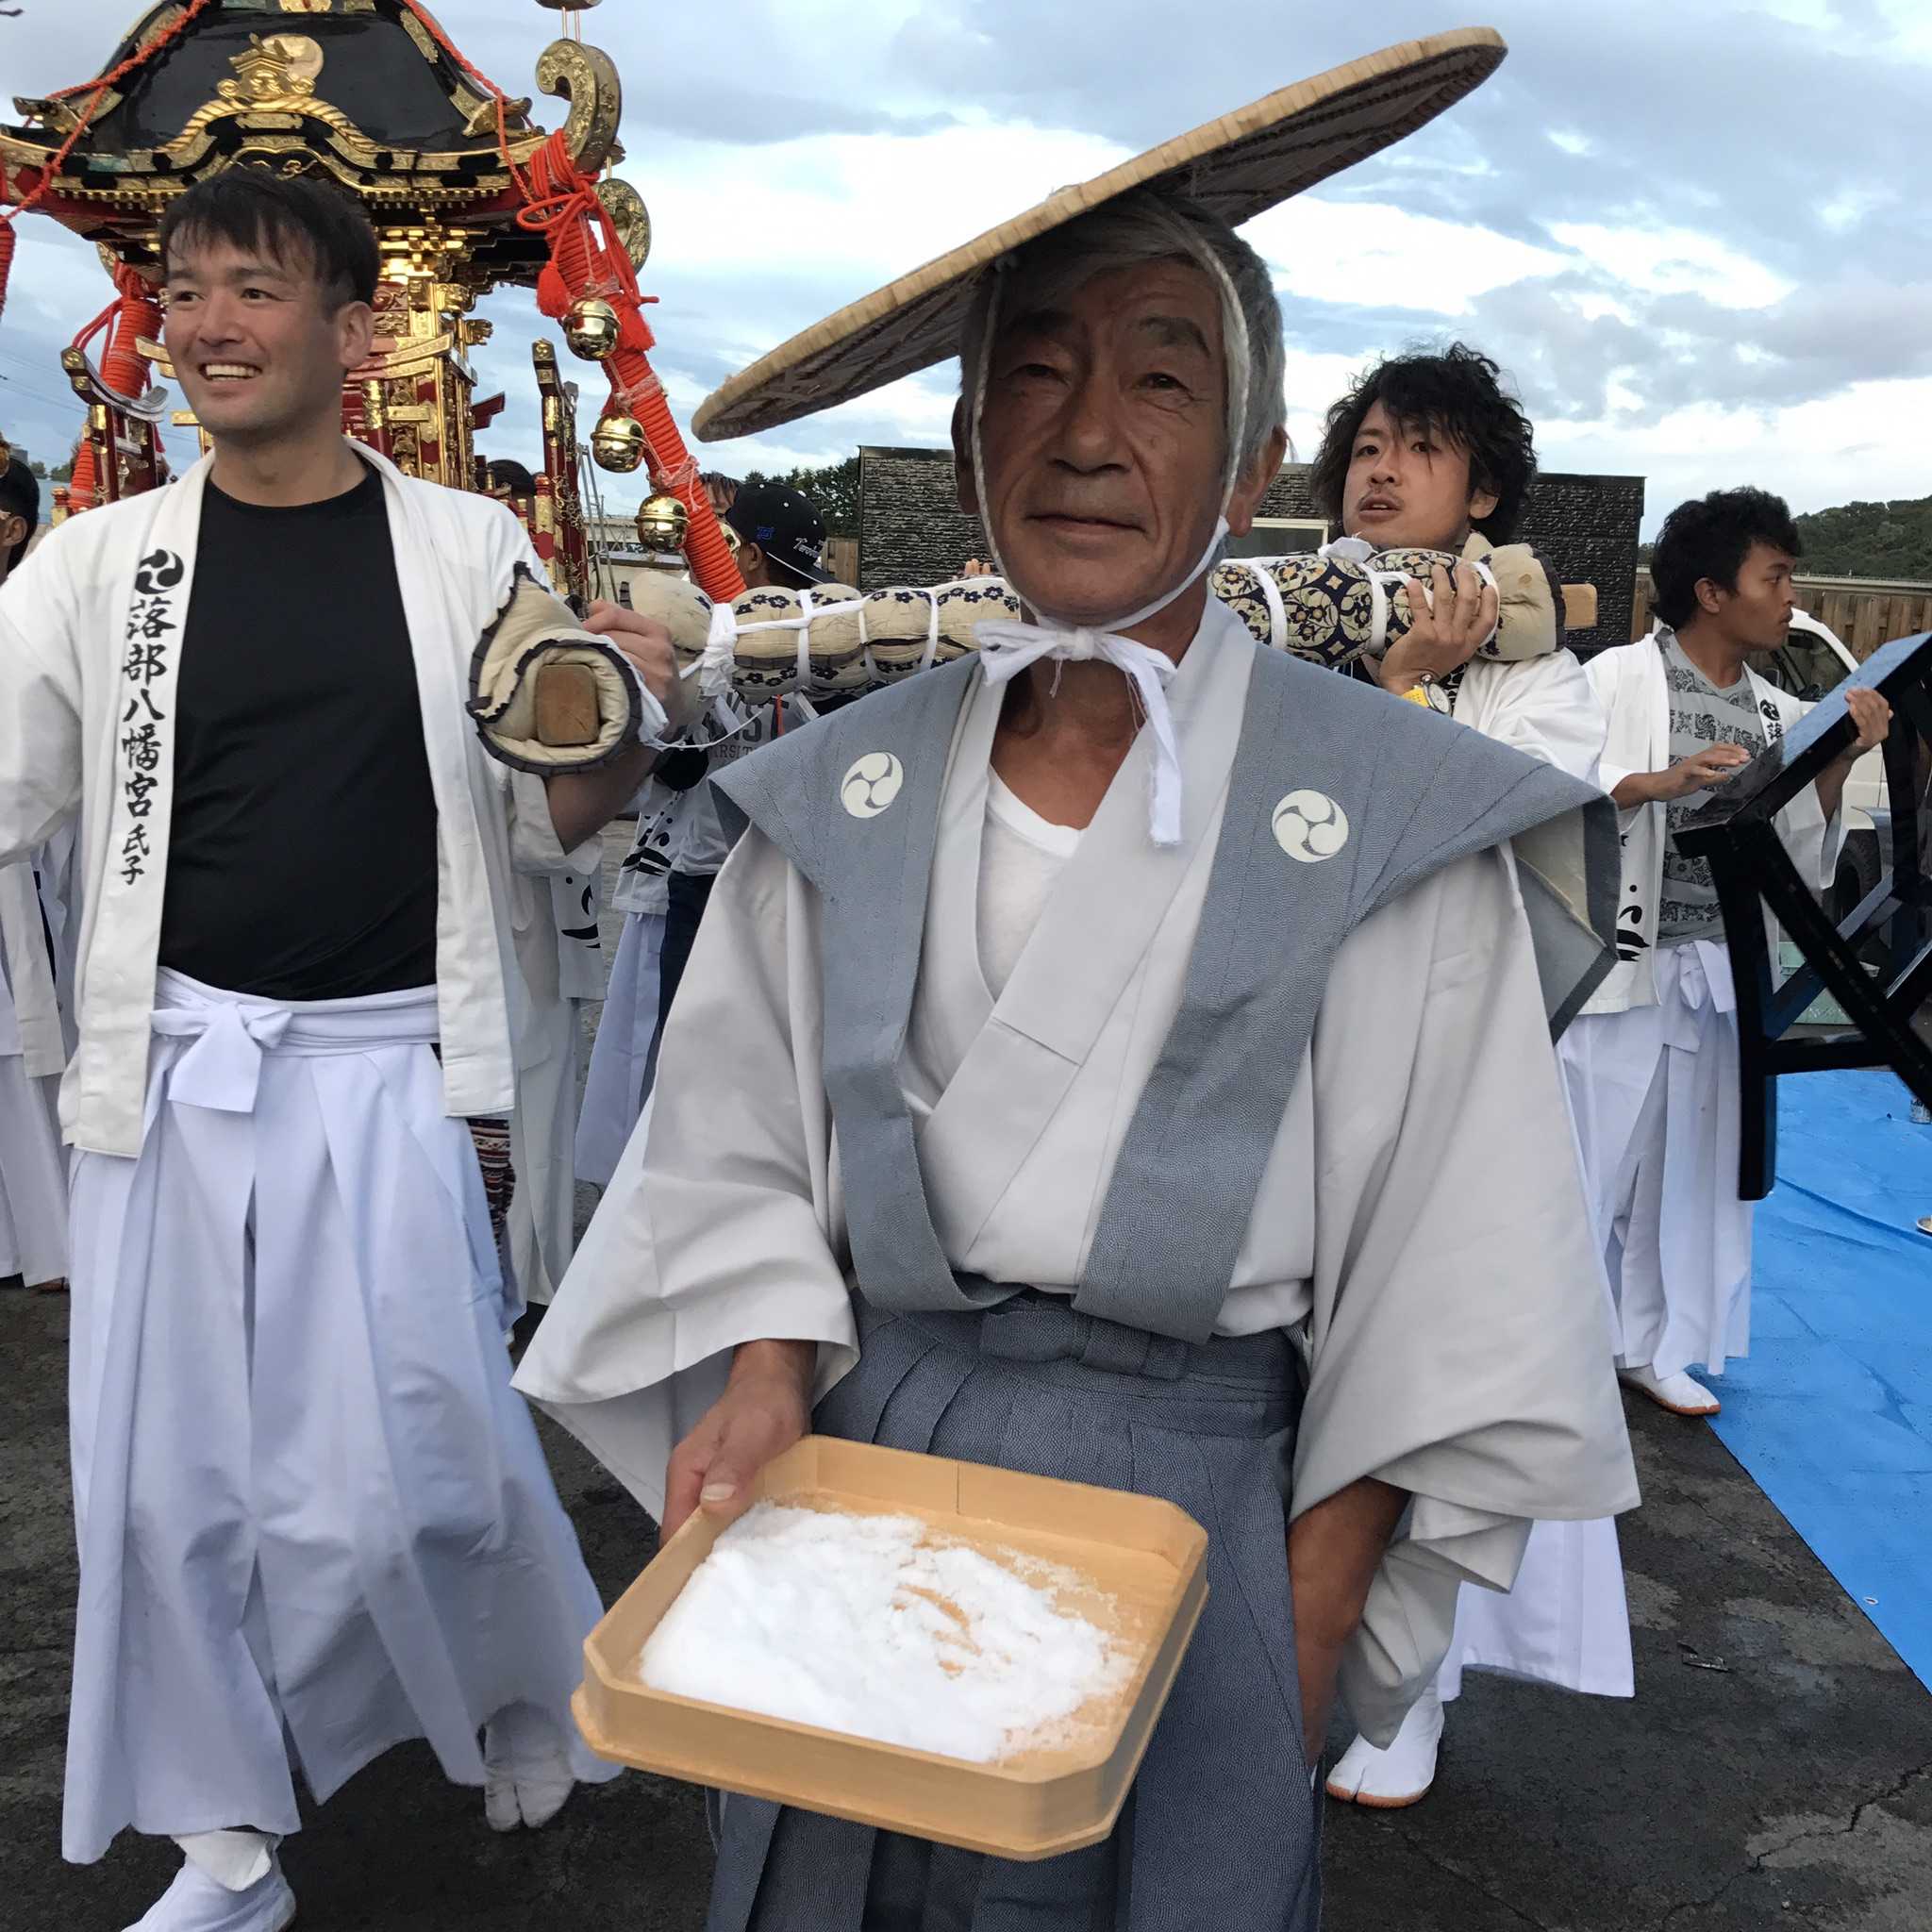 The fish and rice festival in Obira